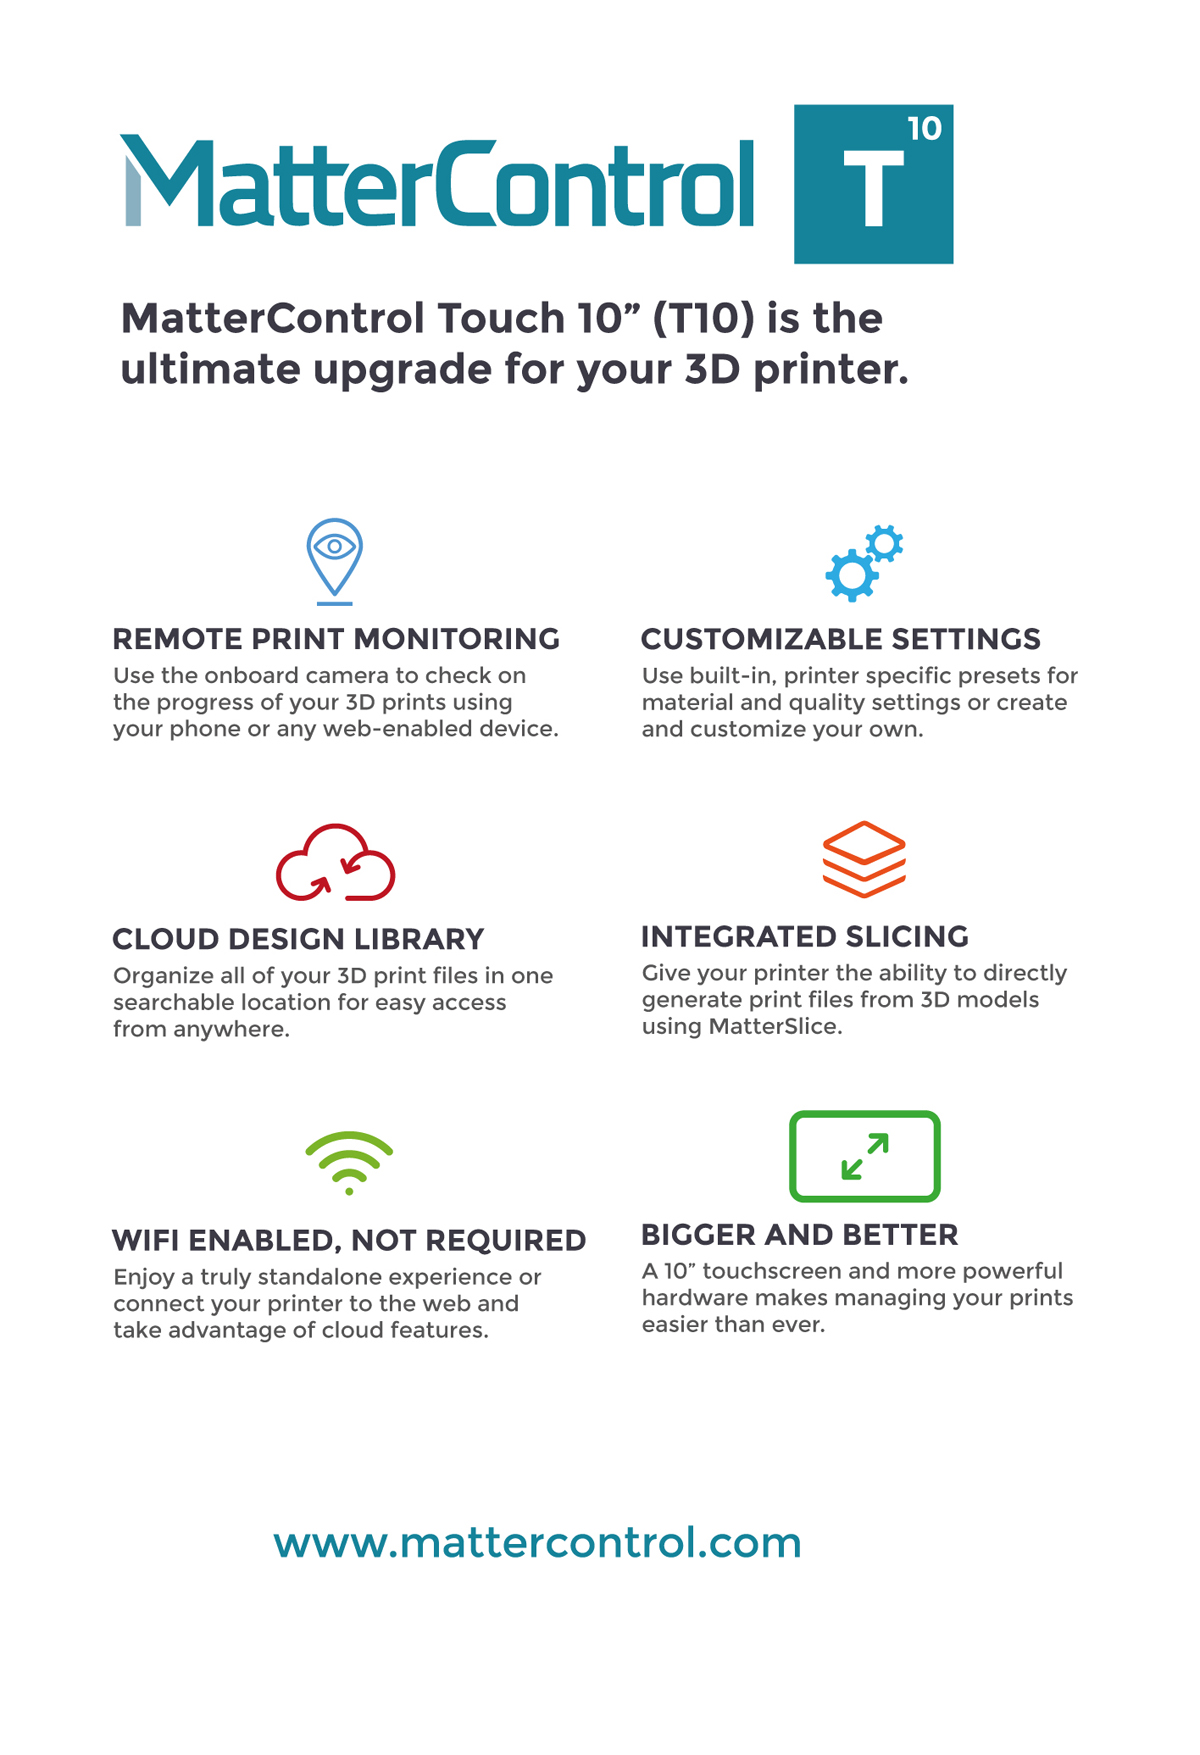 mattercontrol t10 3D printing platform from matter hackers features